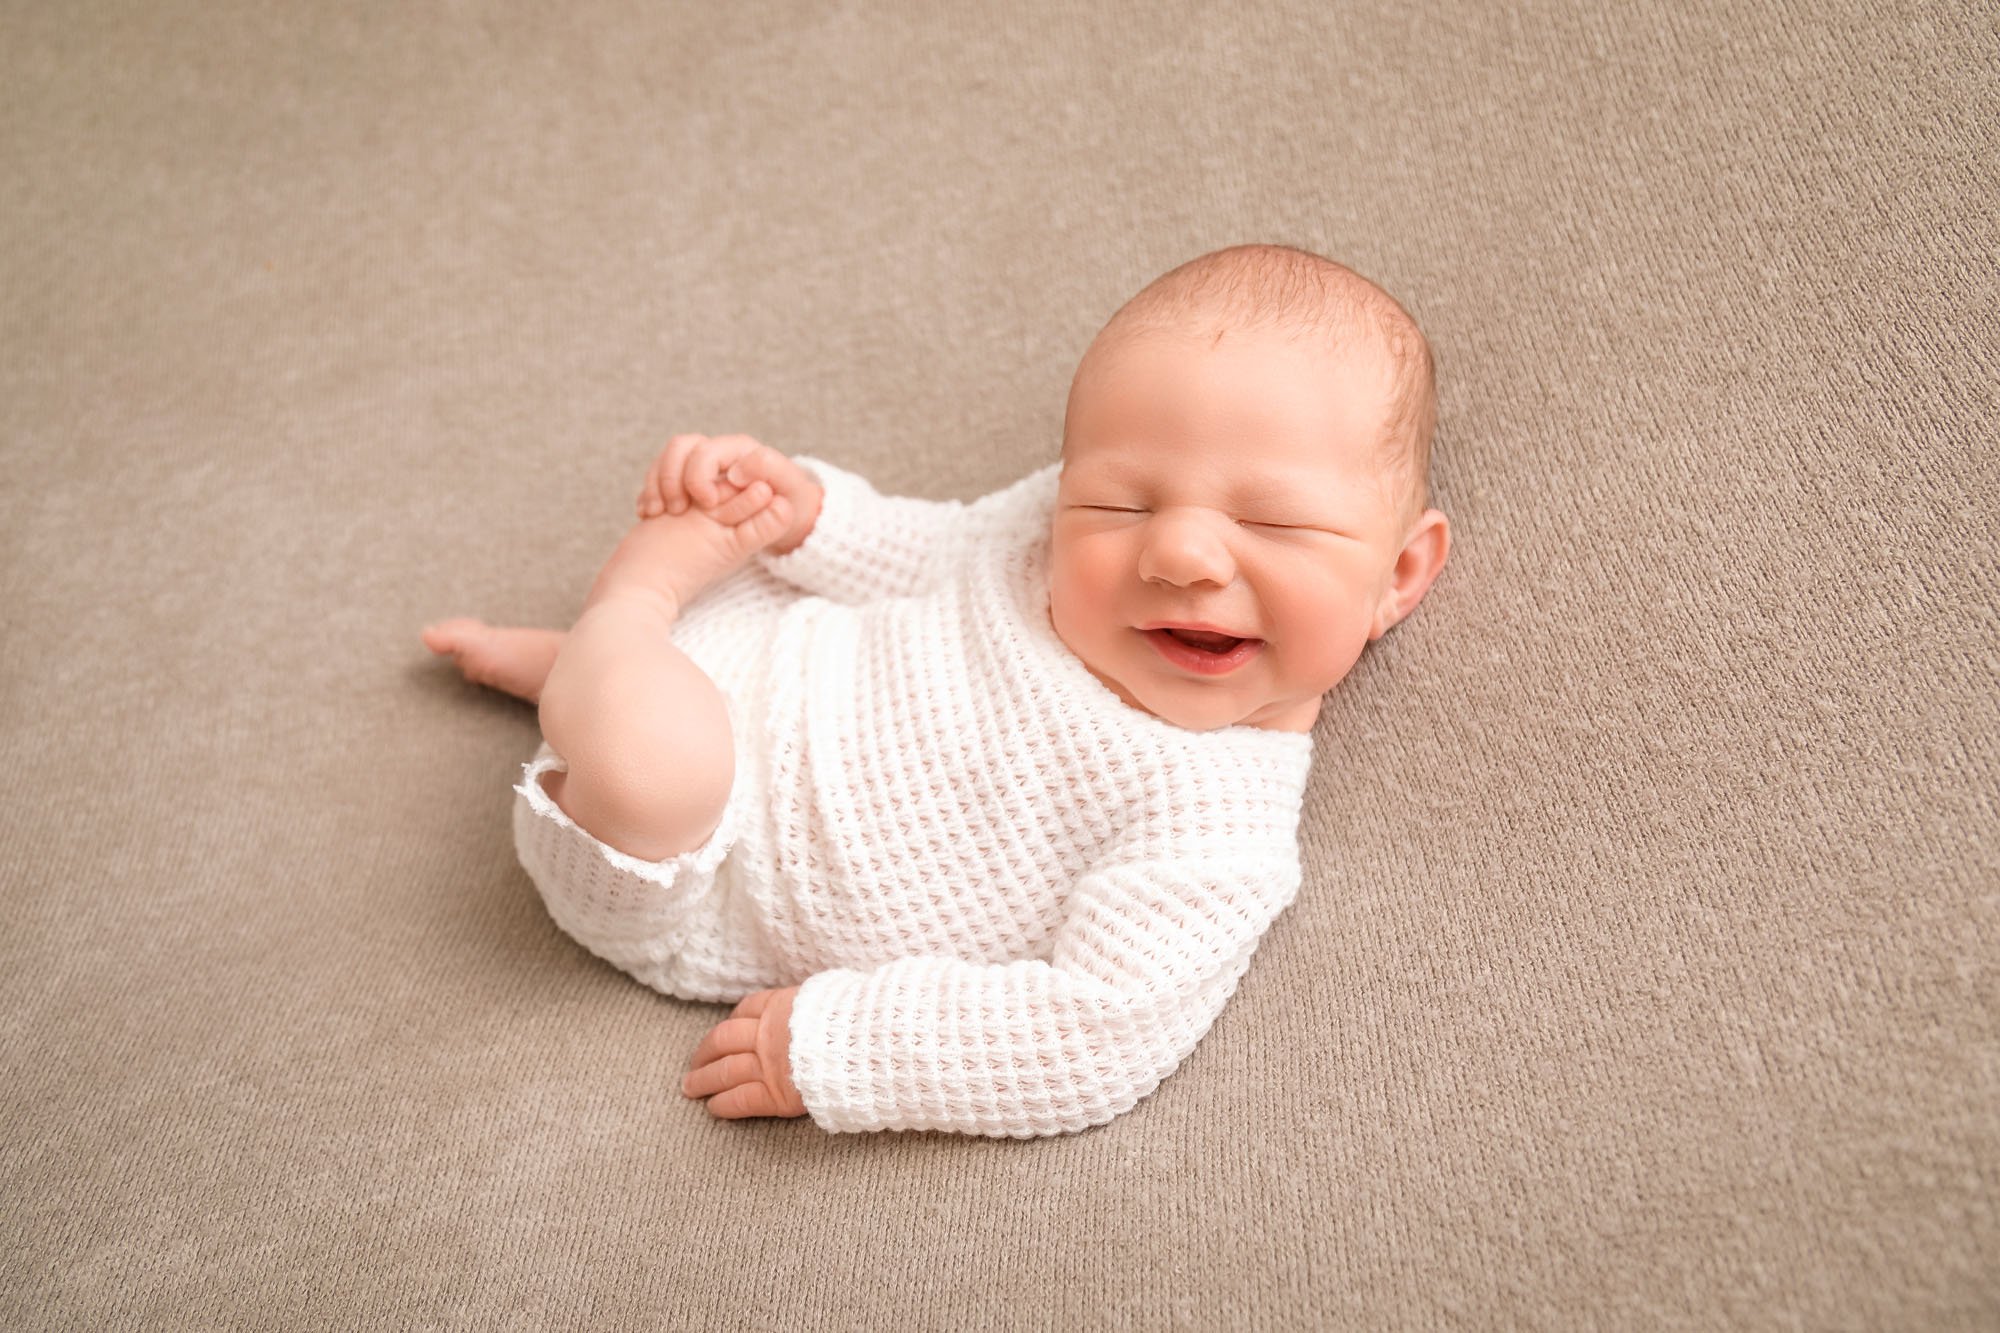 Newborn-photography-in-leeds-baby-holding-foot.jpg